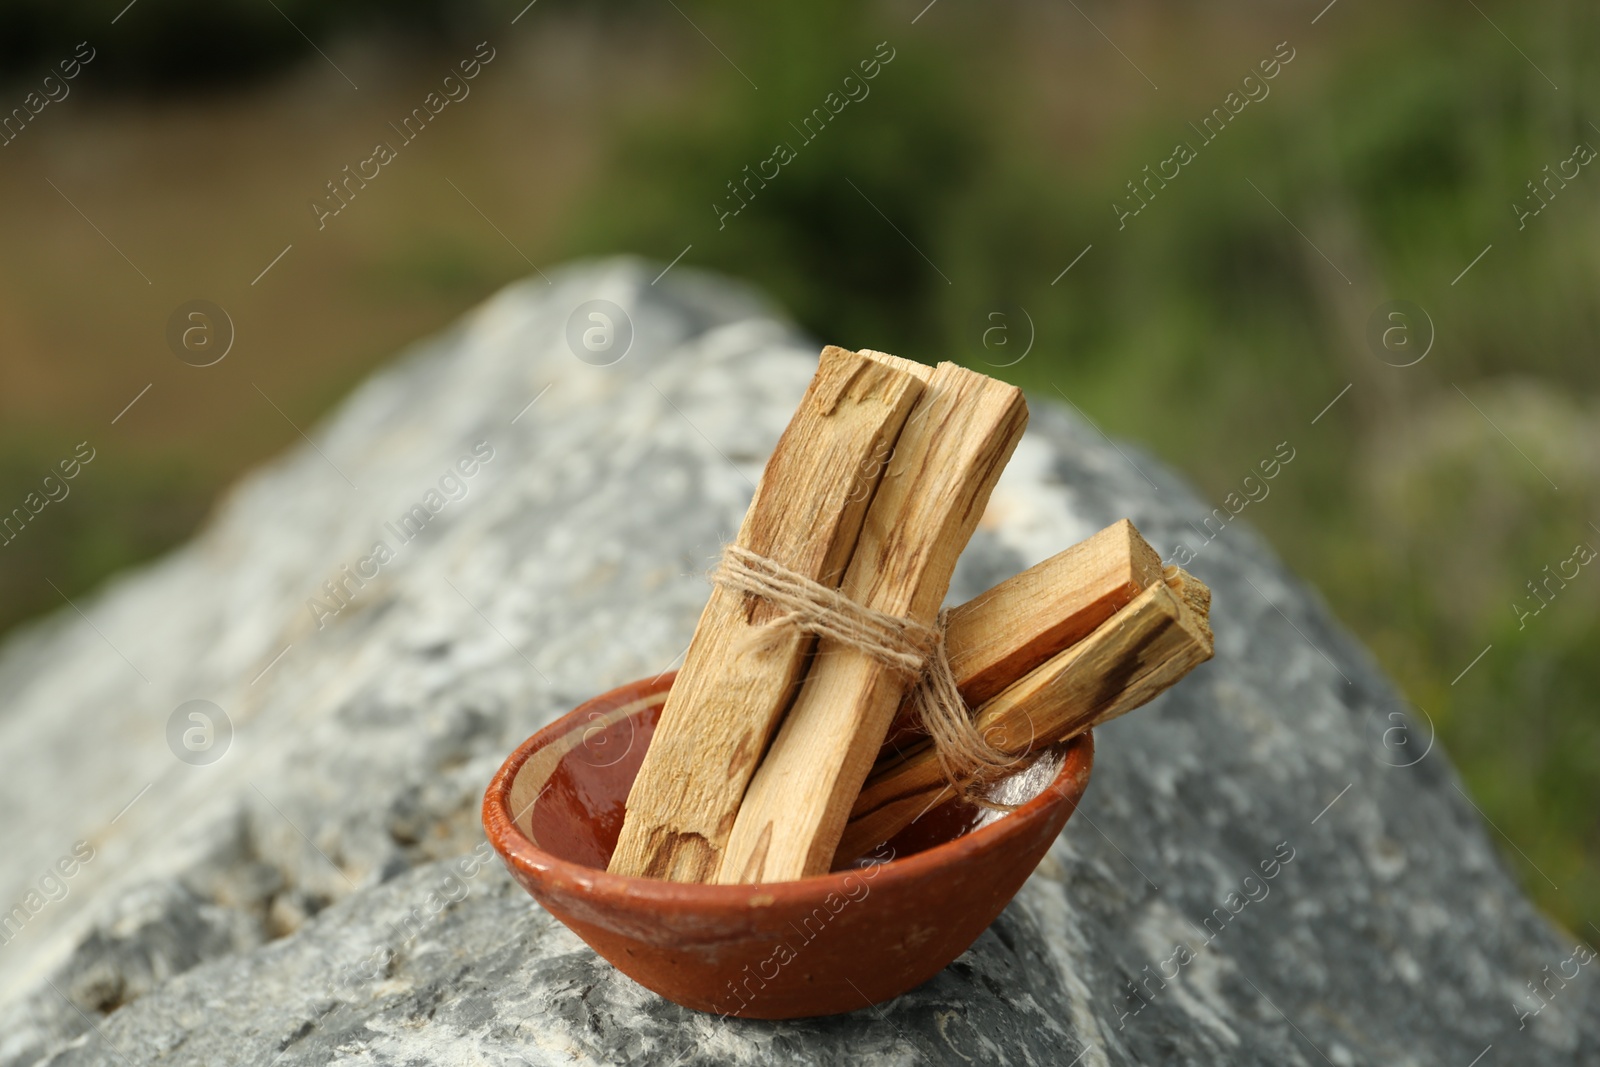 Photo of Many palo santo sticks on stone surface outdoors